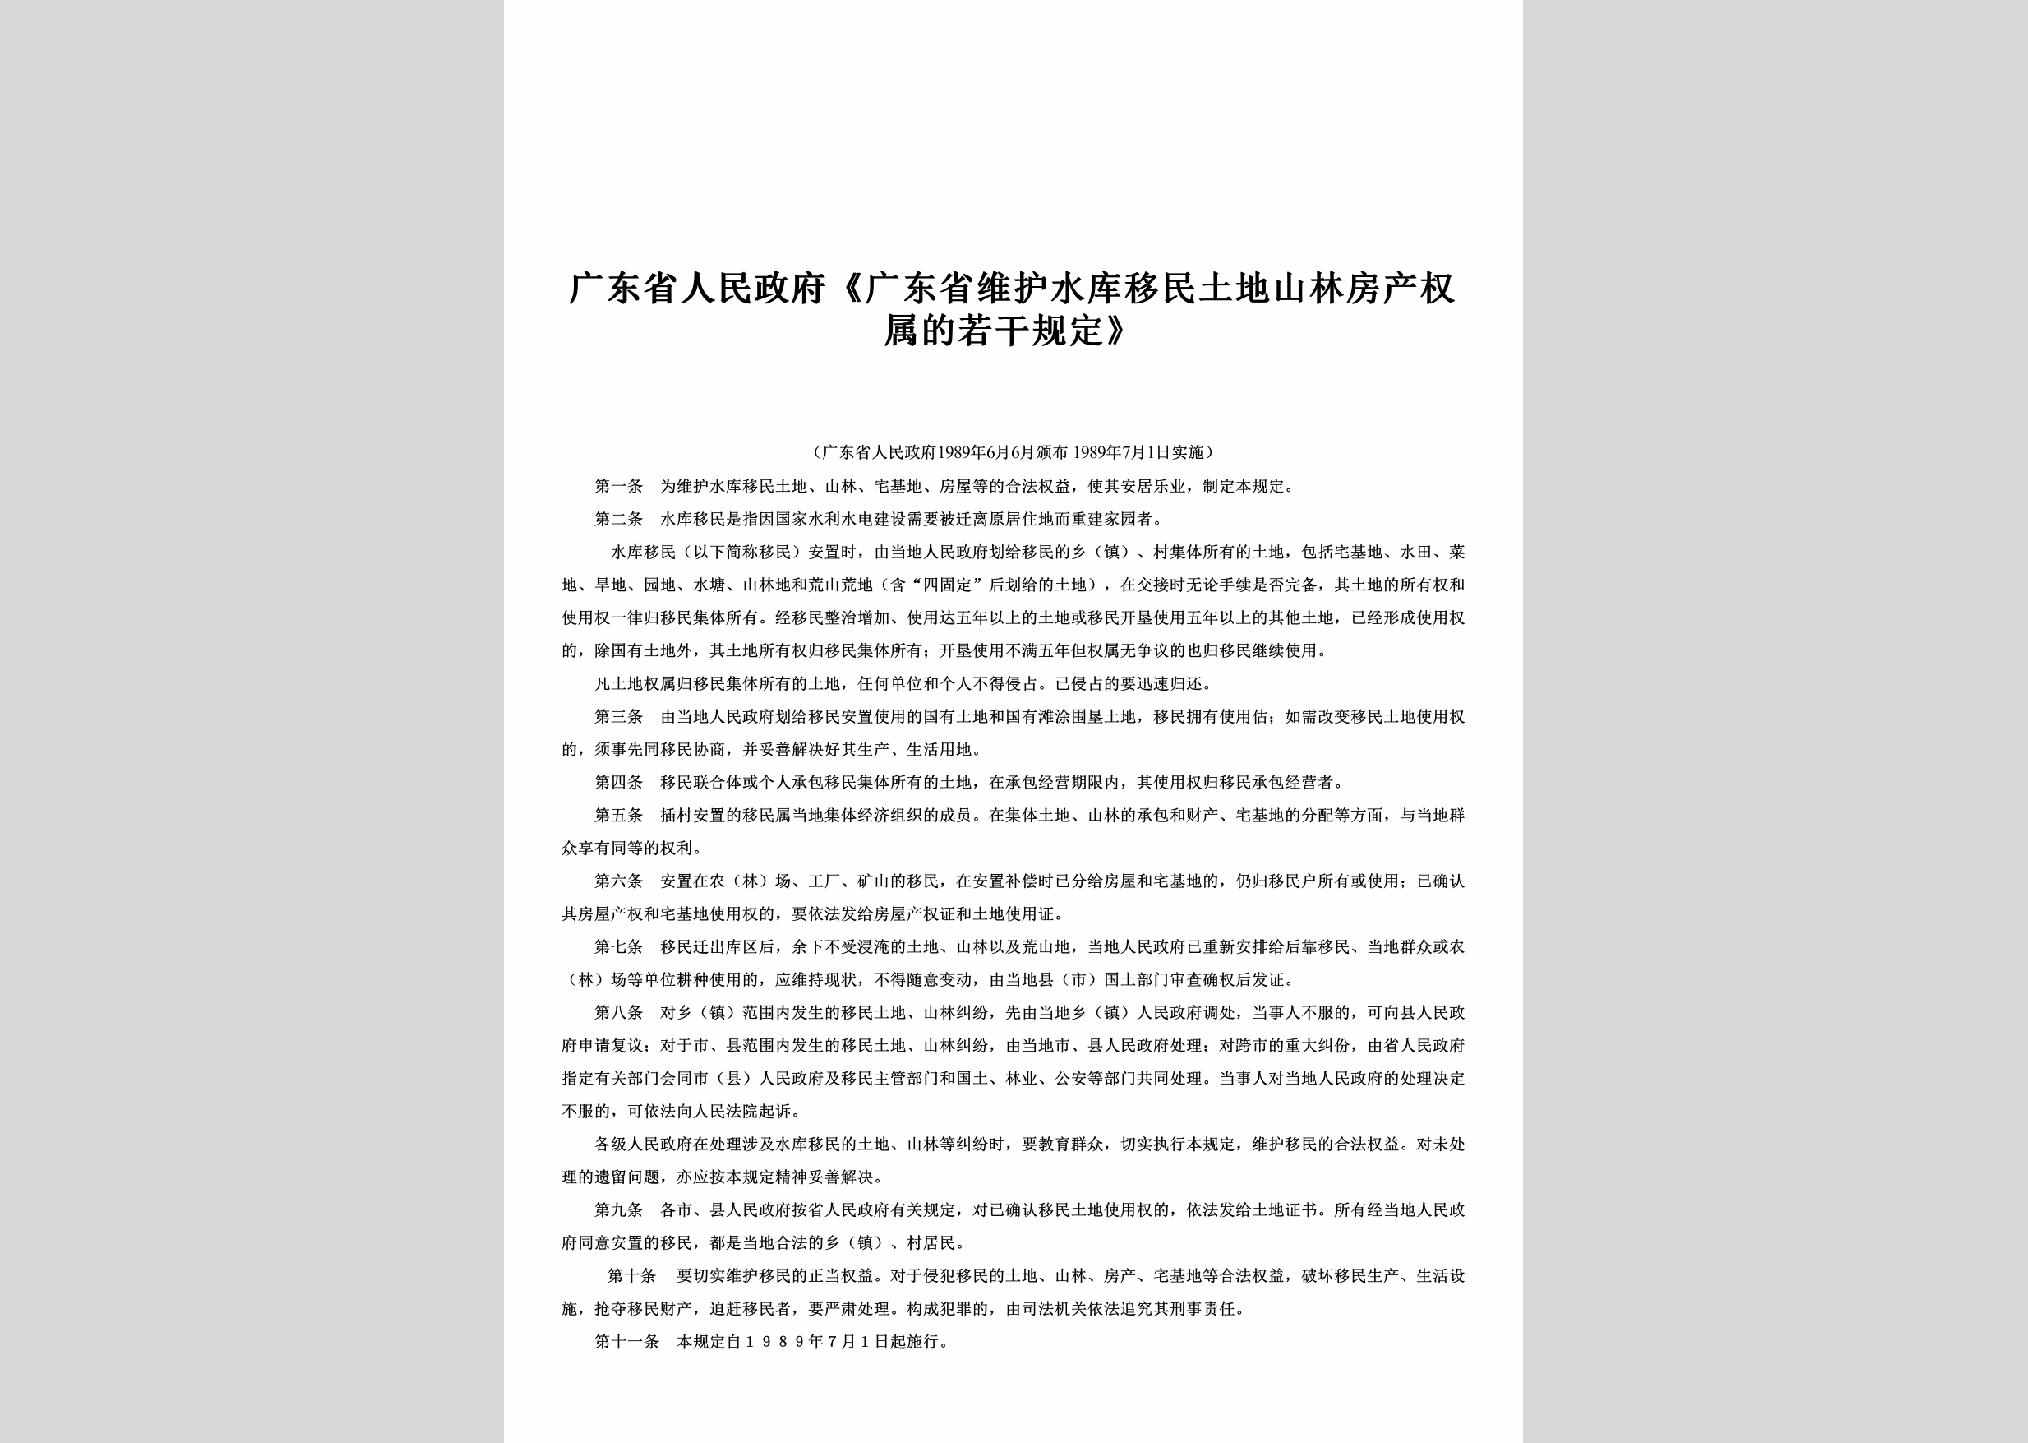 GD-WHSKFCGD-1989：《广东省维护水库移民土地山林房产权属的若干规定》